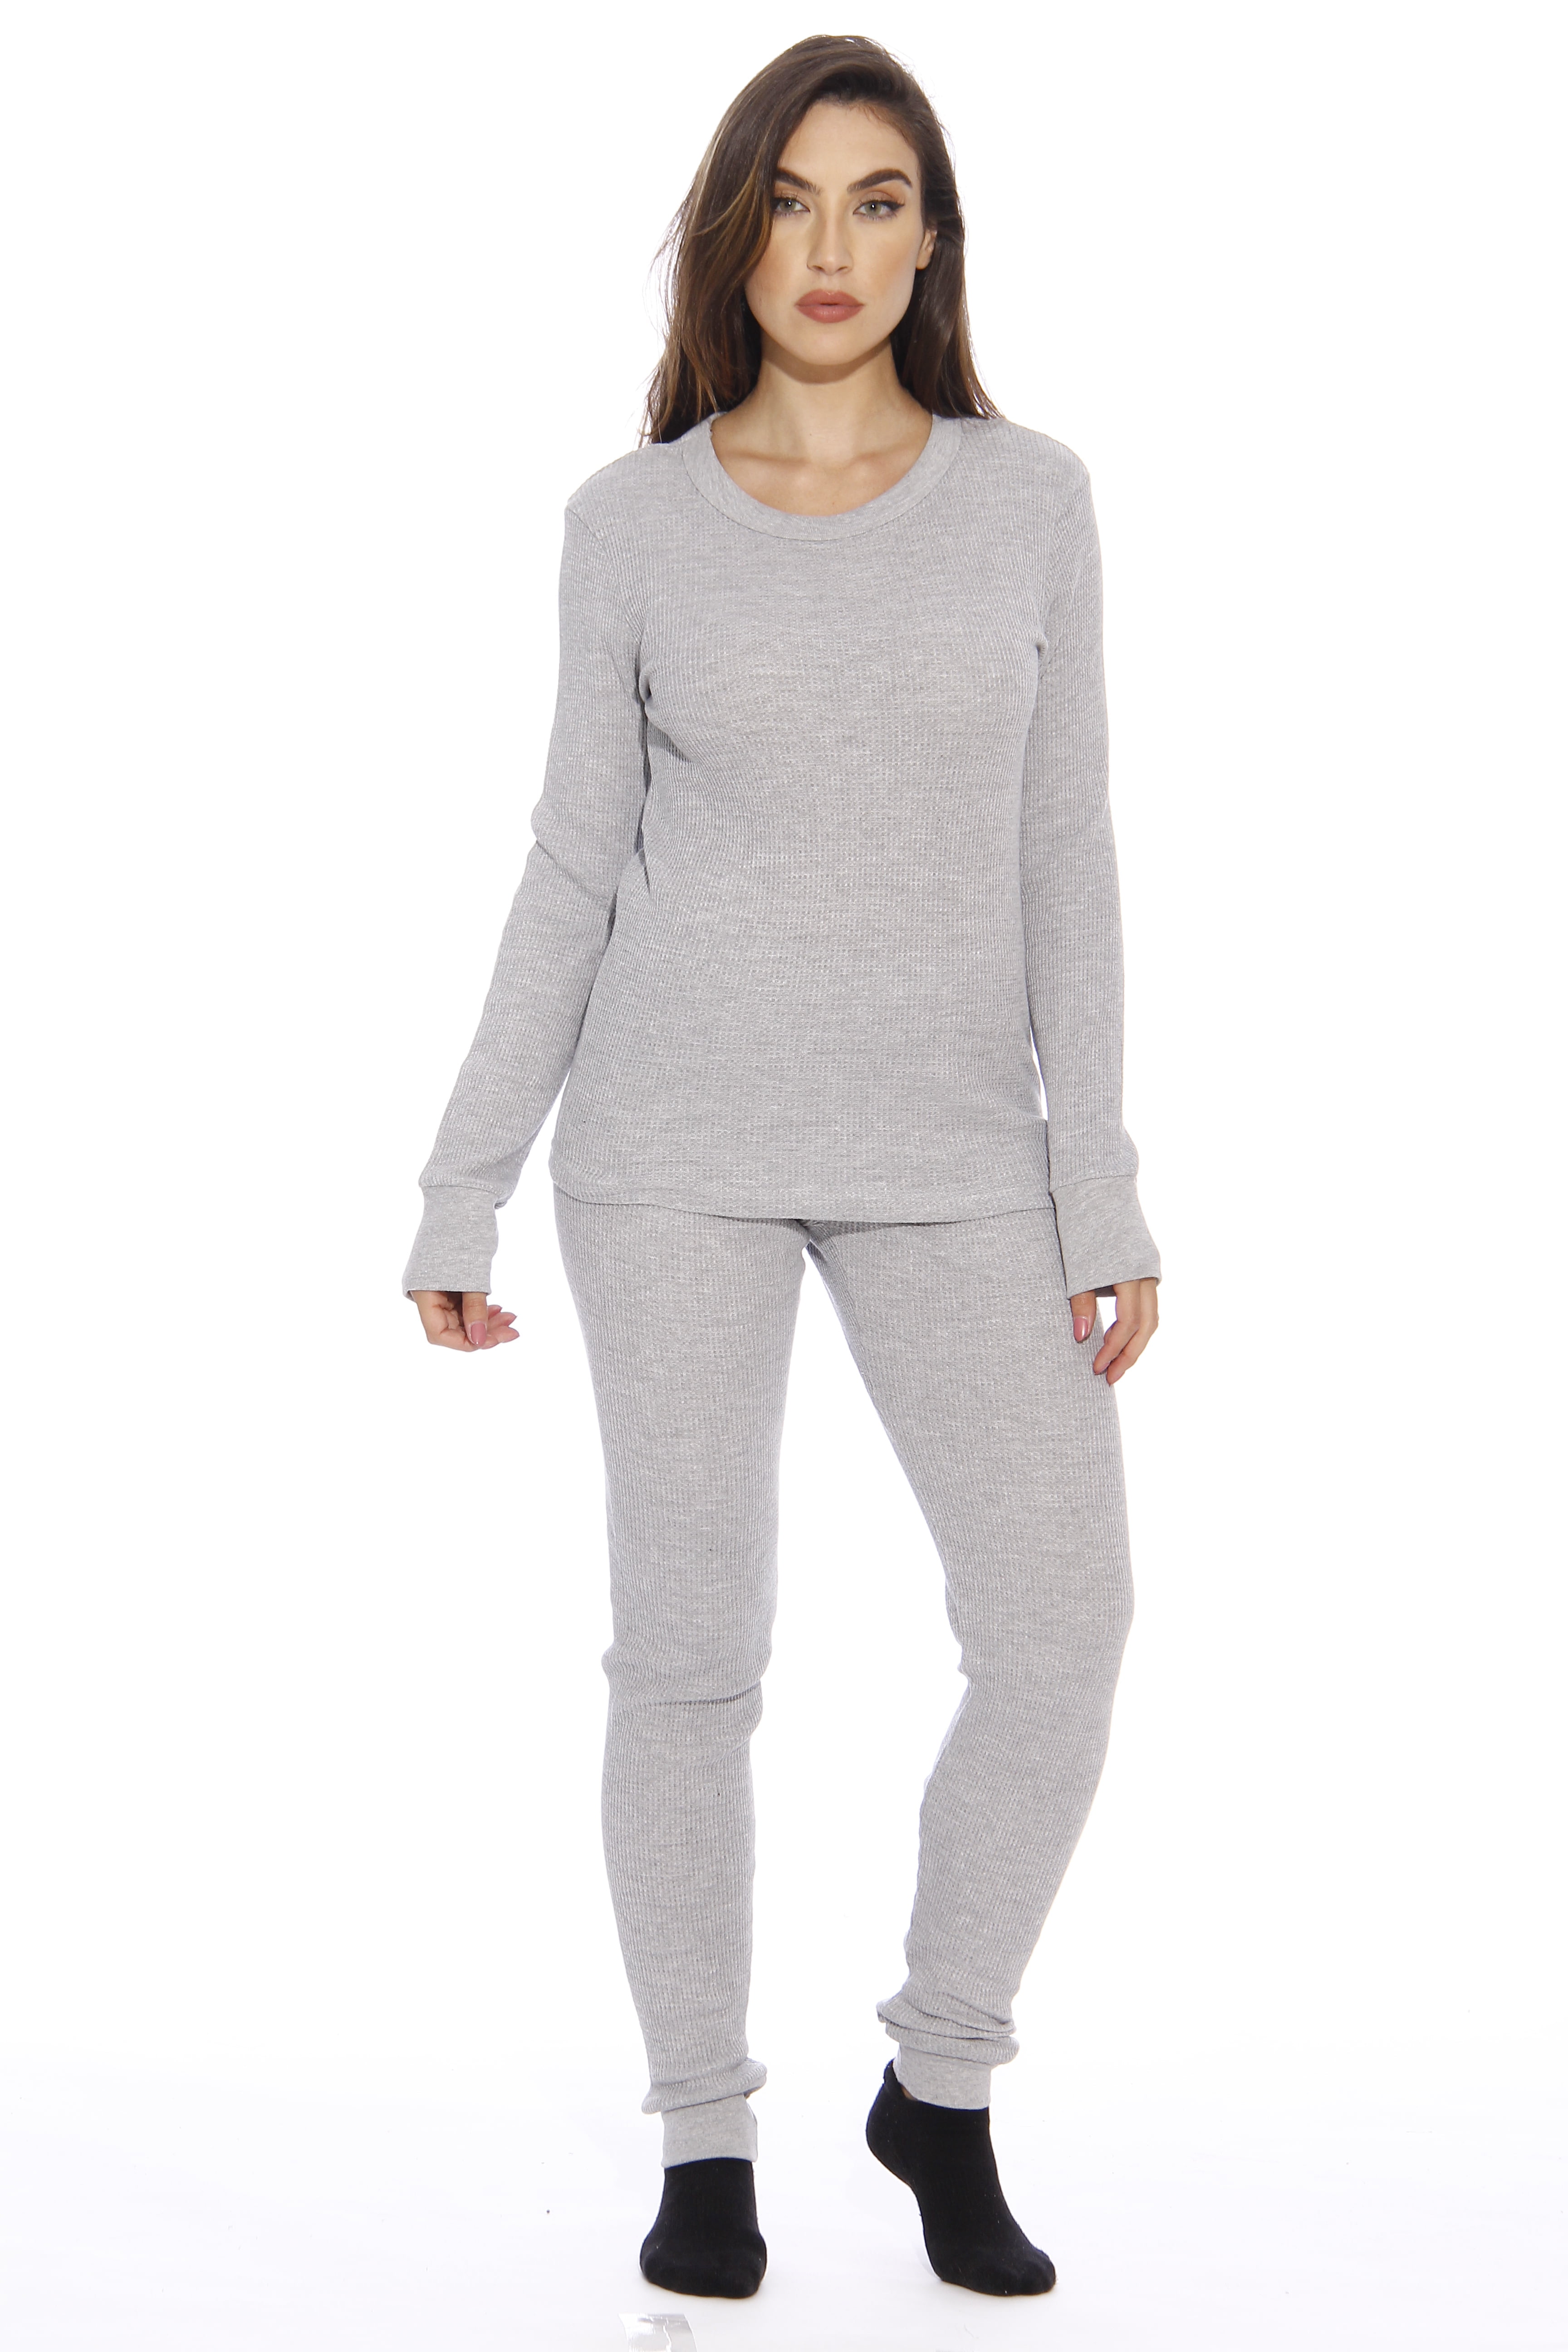 Just Love Women's Thermal Underwear Pajamas Set (Grey, X-large) 